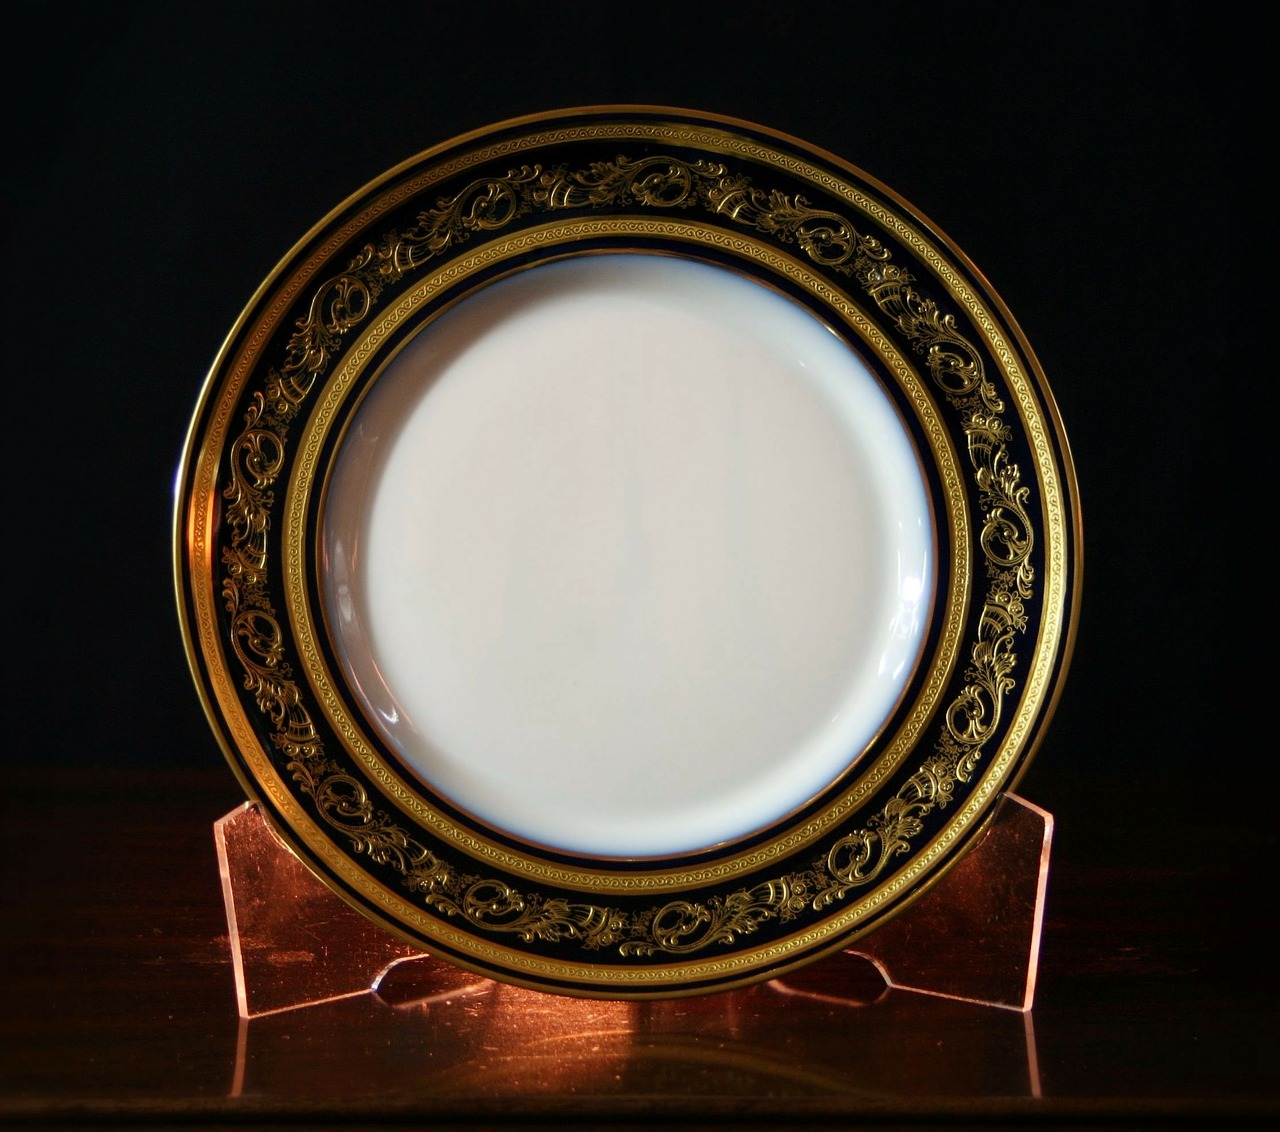 plate saucer dish free photo